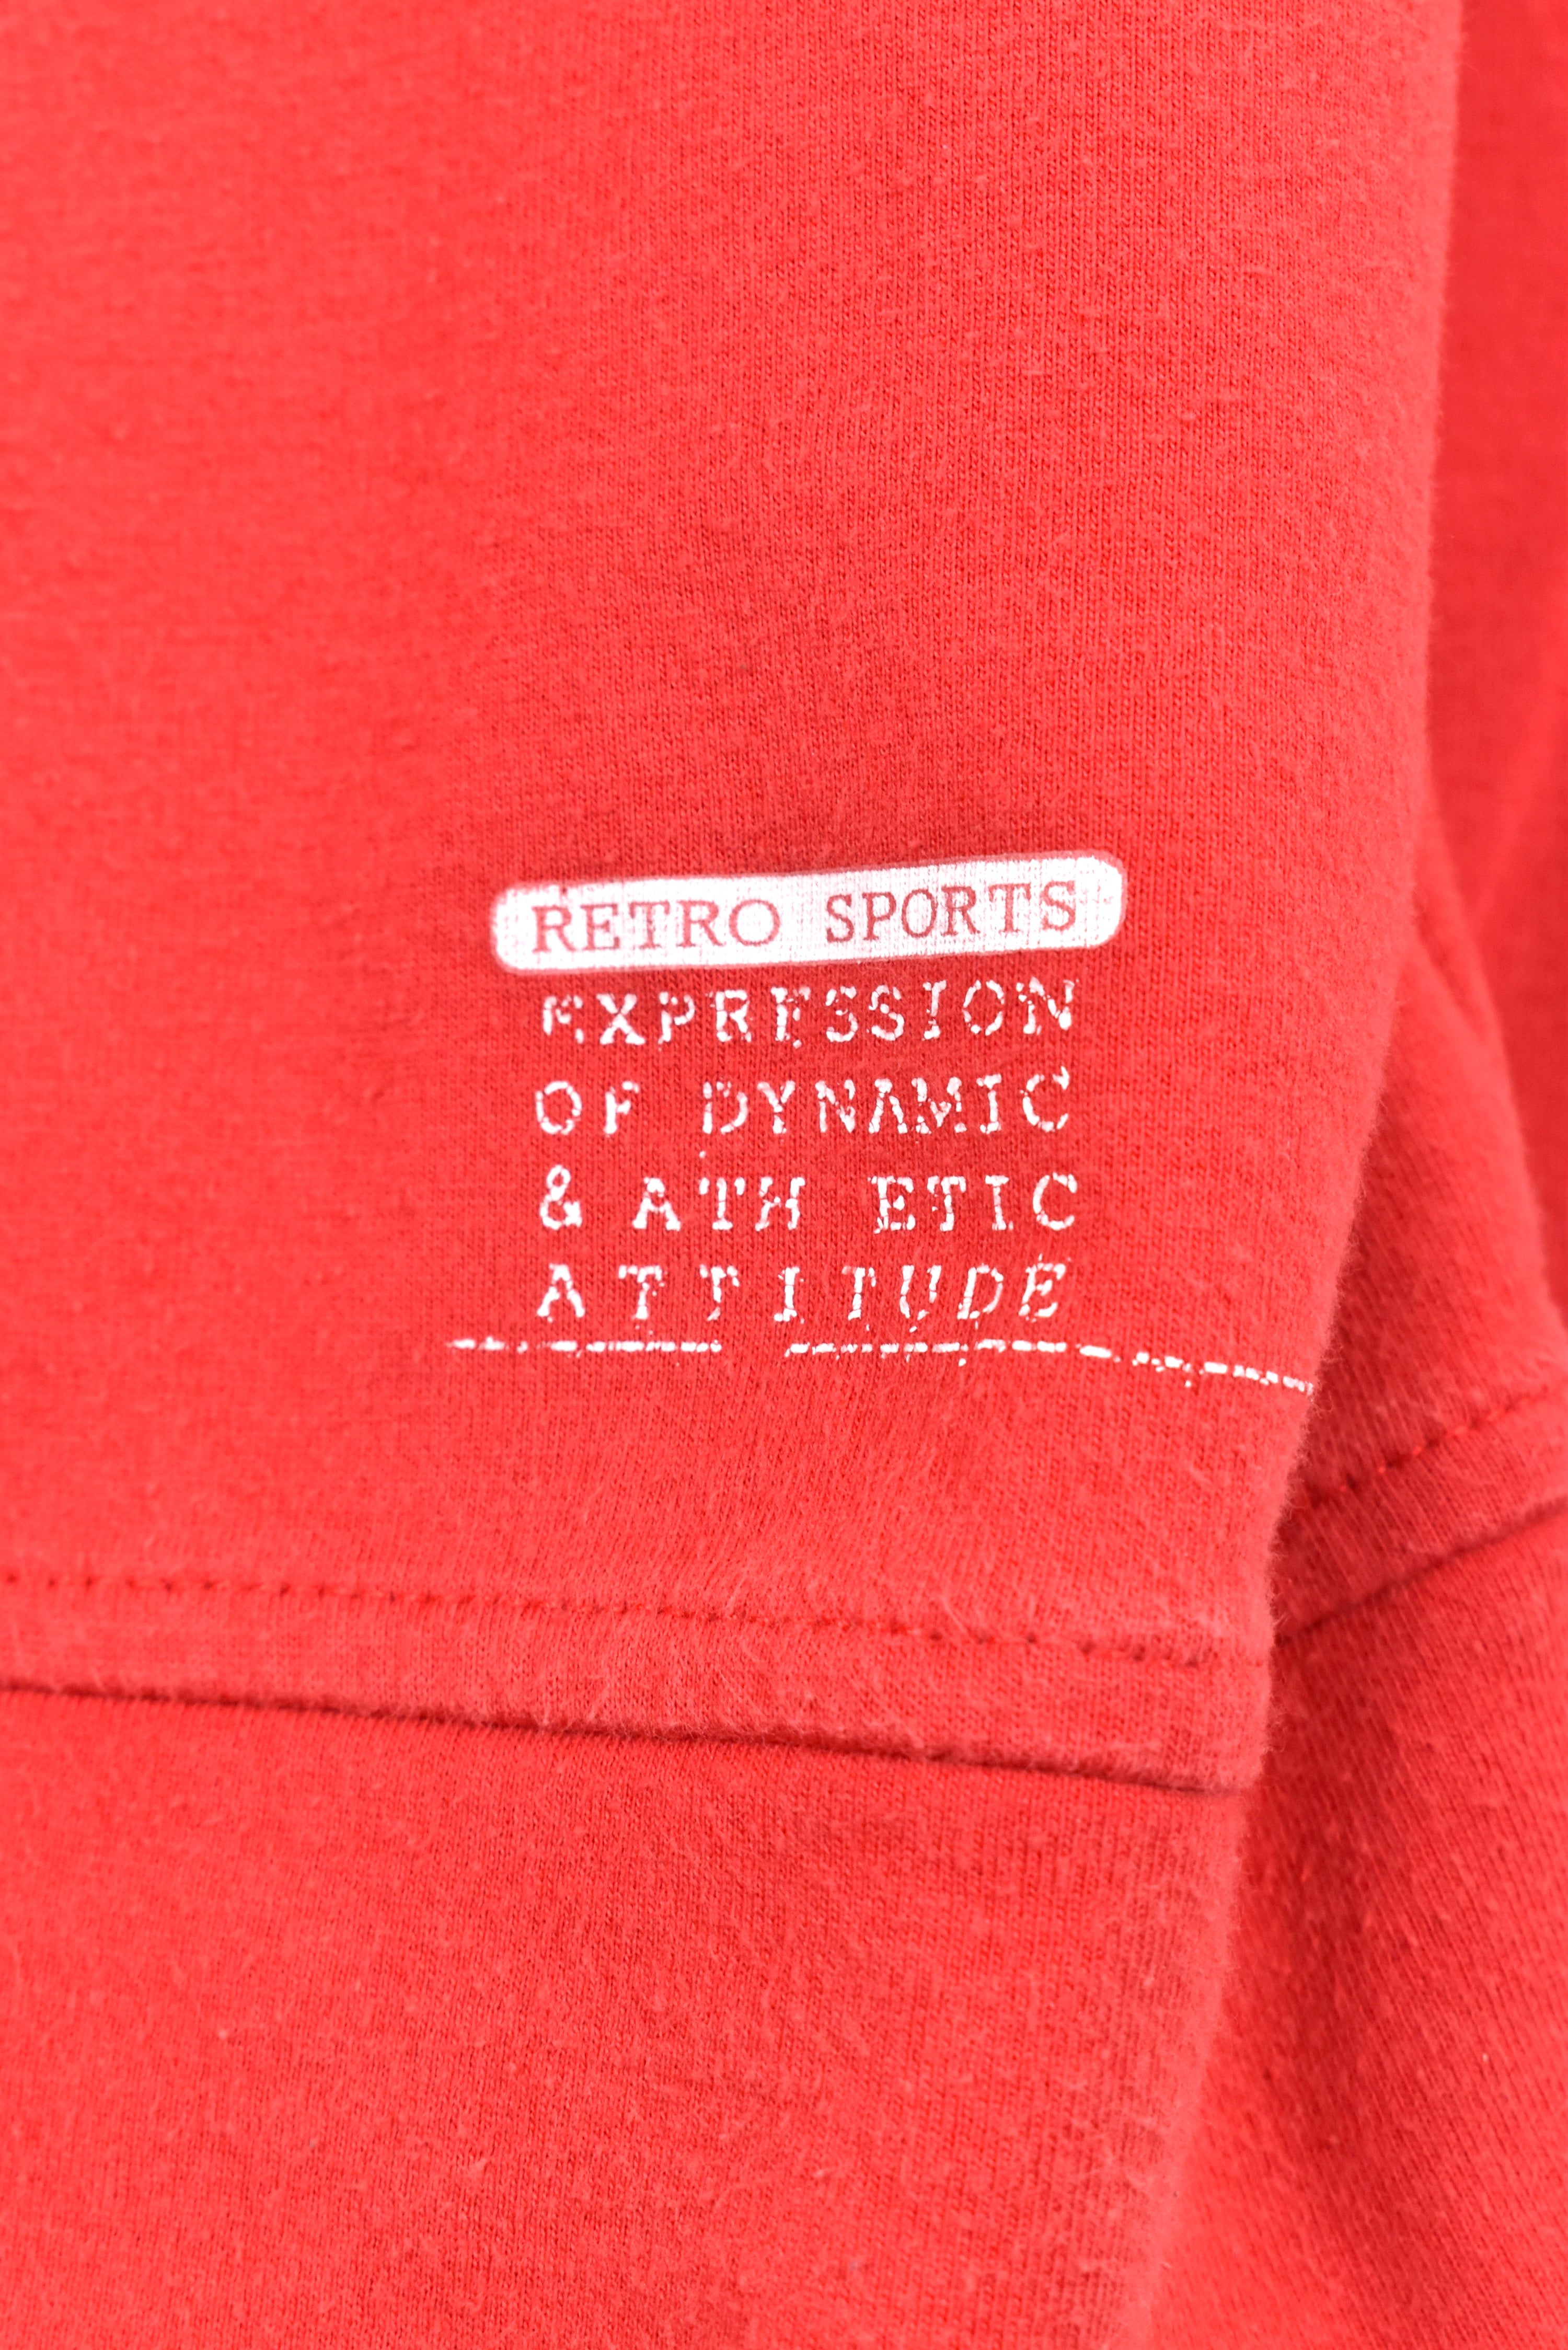 Vintage Champion sweatshirt, red graphic crewneck - AU Medium CHAMPION